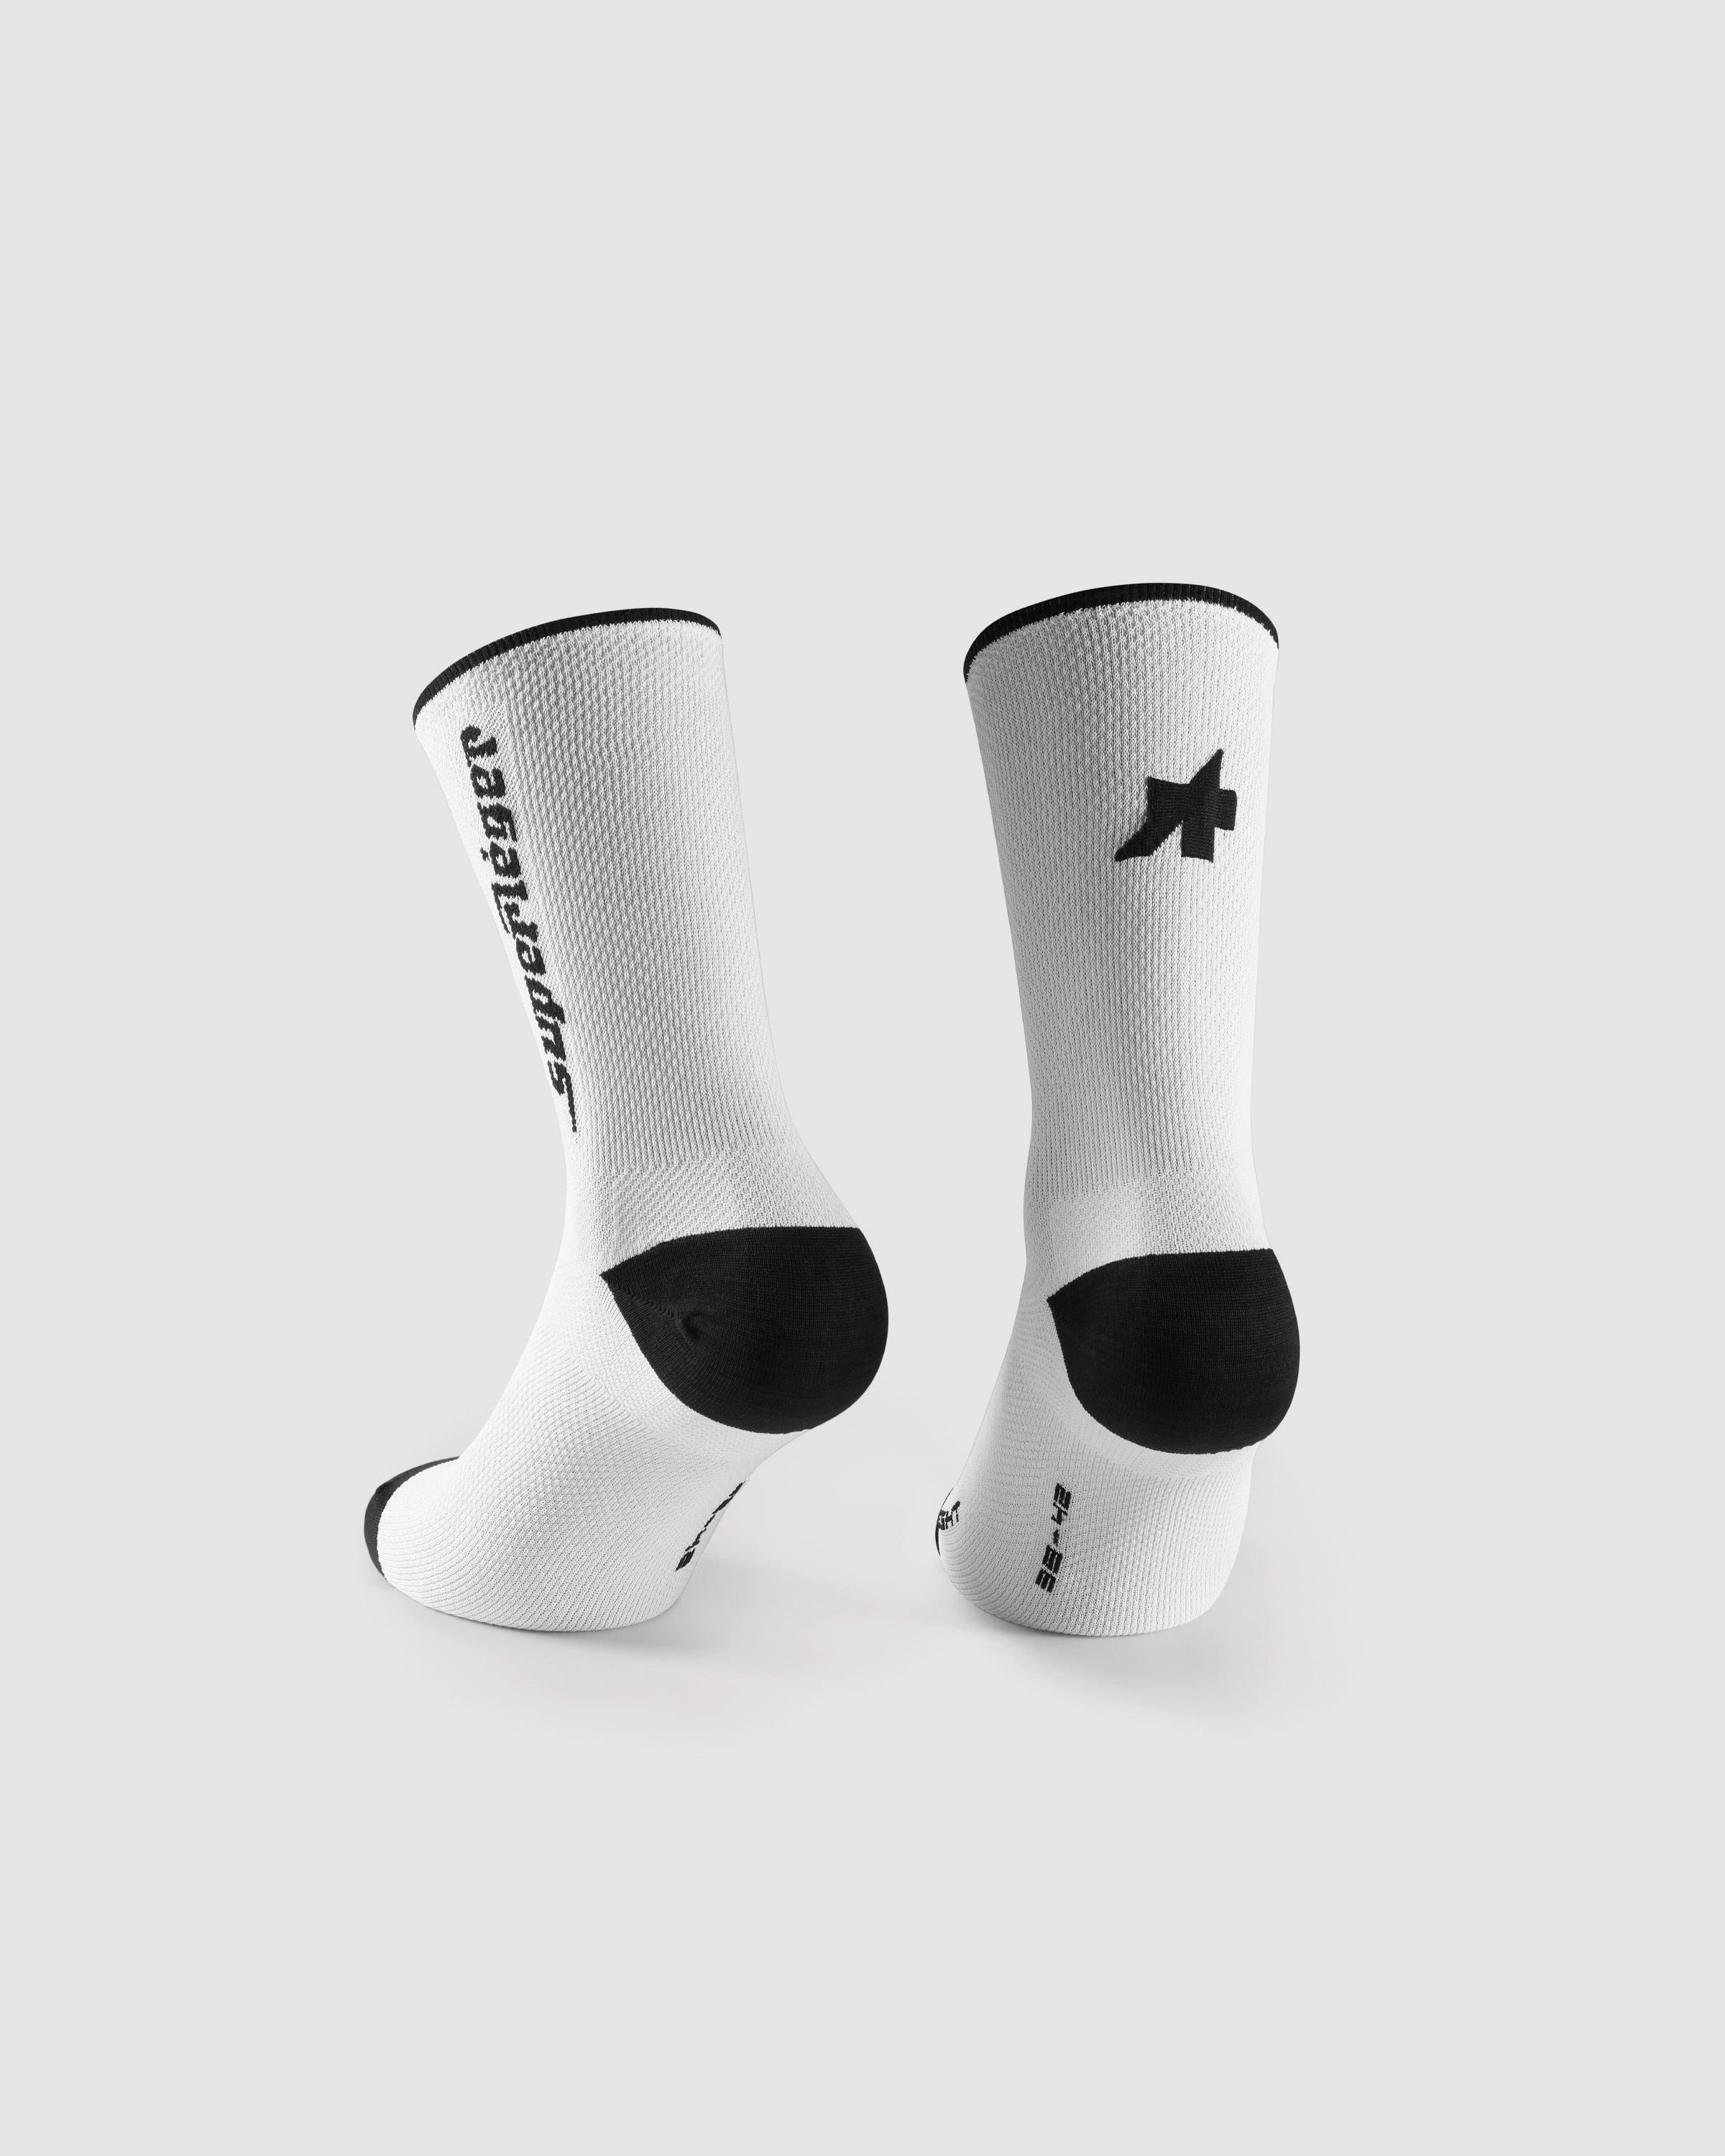 ASSOSOIRES RS Socks SUPERLÉGER - ASSOS Of Switzerland - Official Outlet